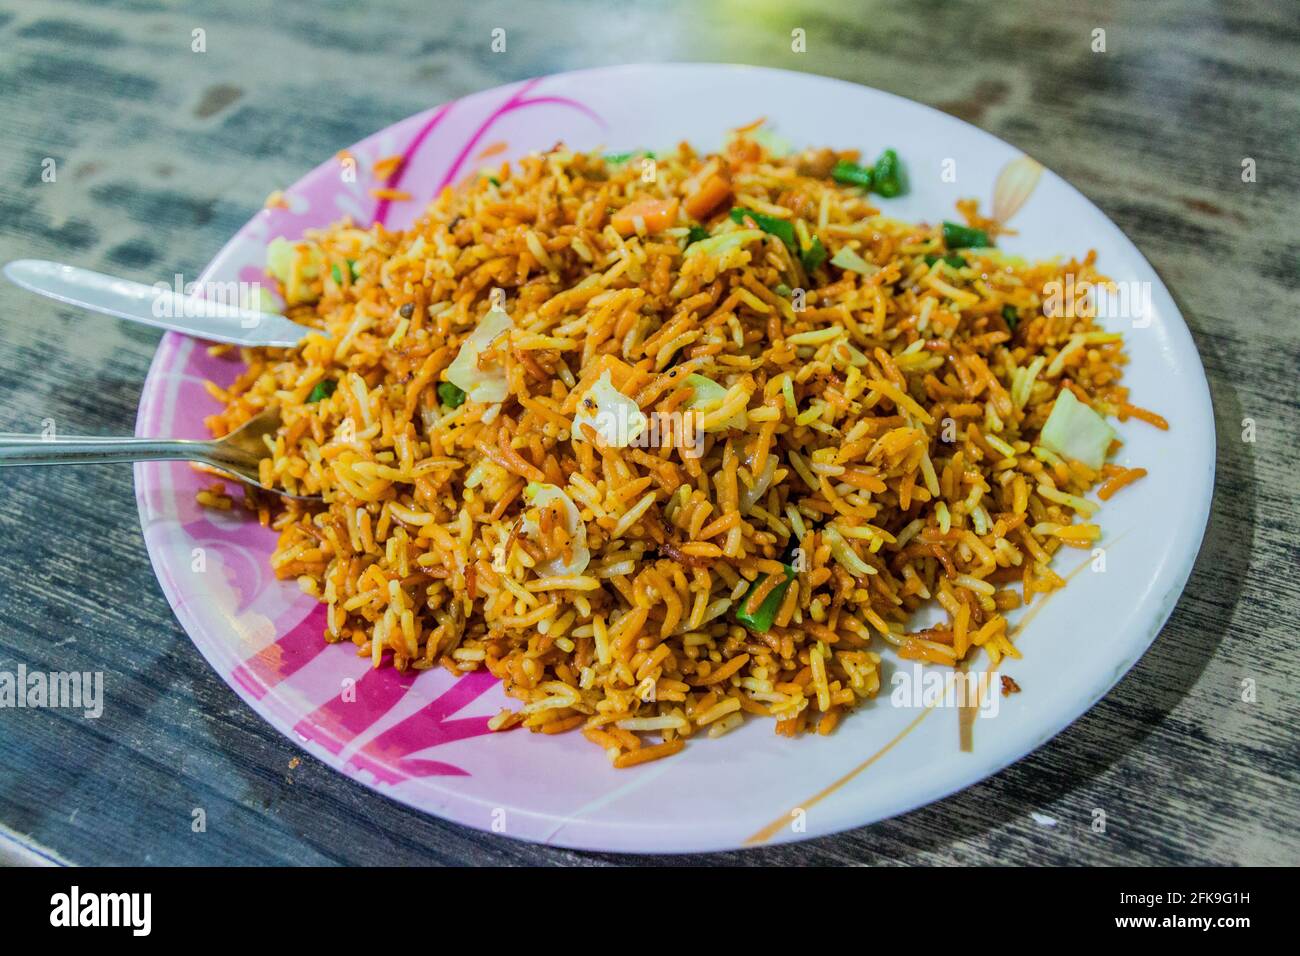 Vegetable Biryani in a simple restaurant in India Stock Photo